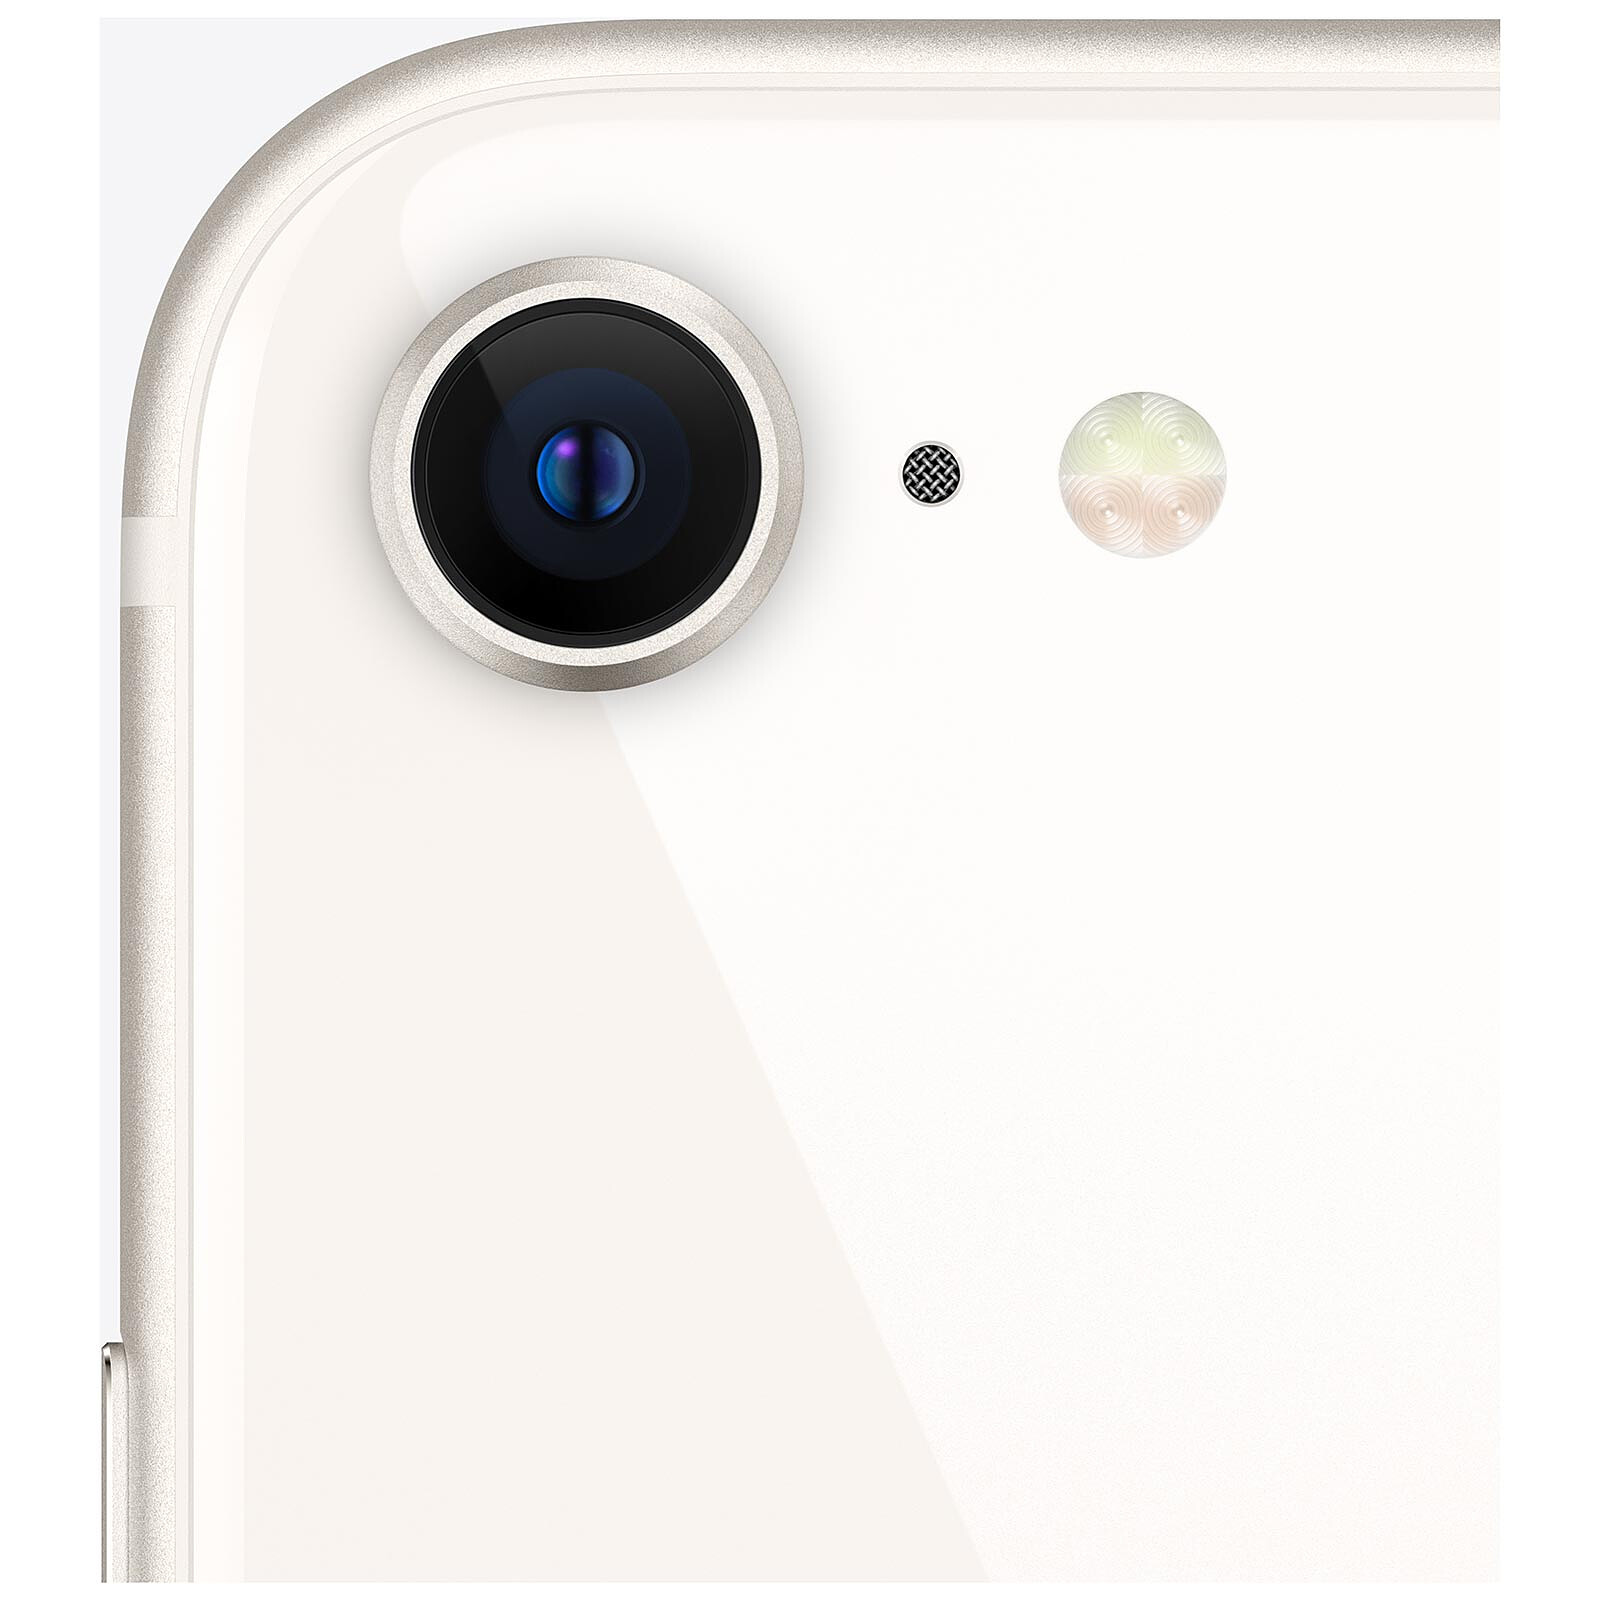 Celular Reacondicionado iPhone SE 2020 64Gb Apple